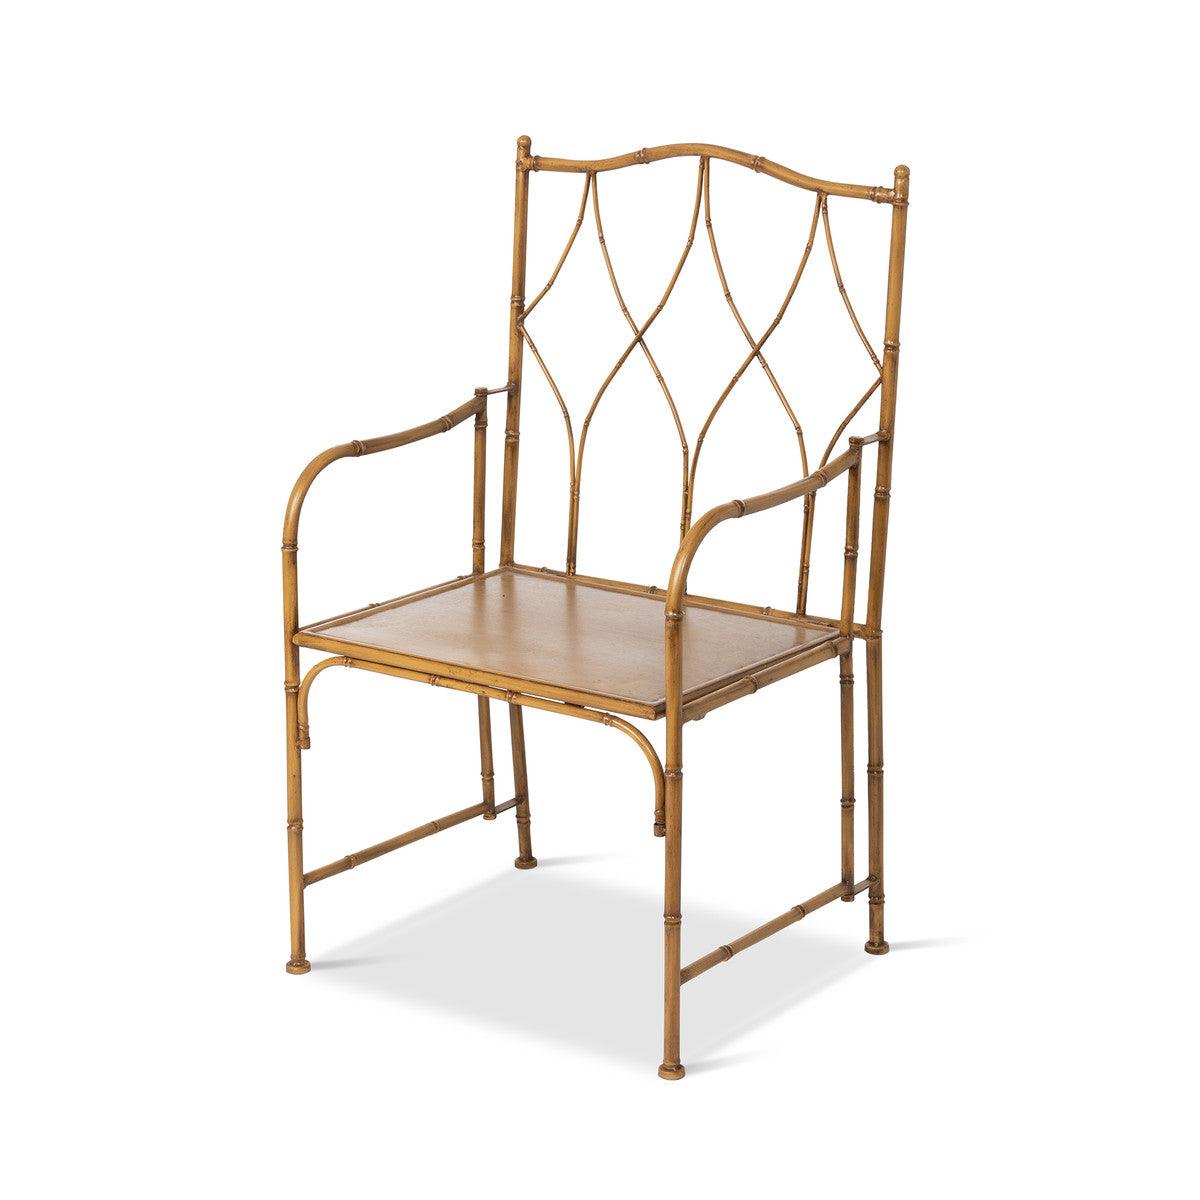 Roanoke Metal Porch Chair - Signastyle Boutique